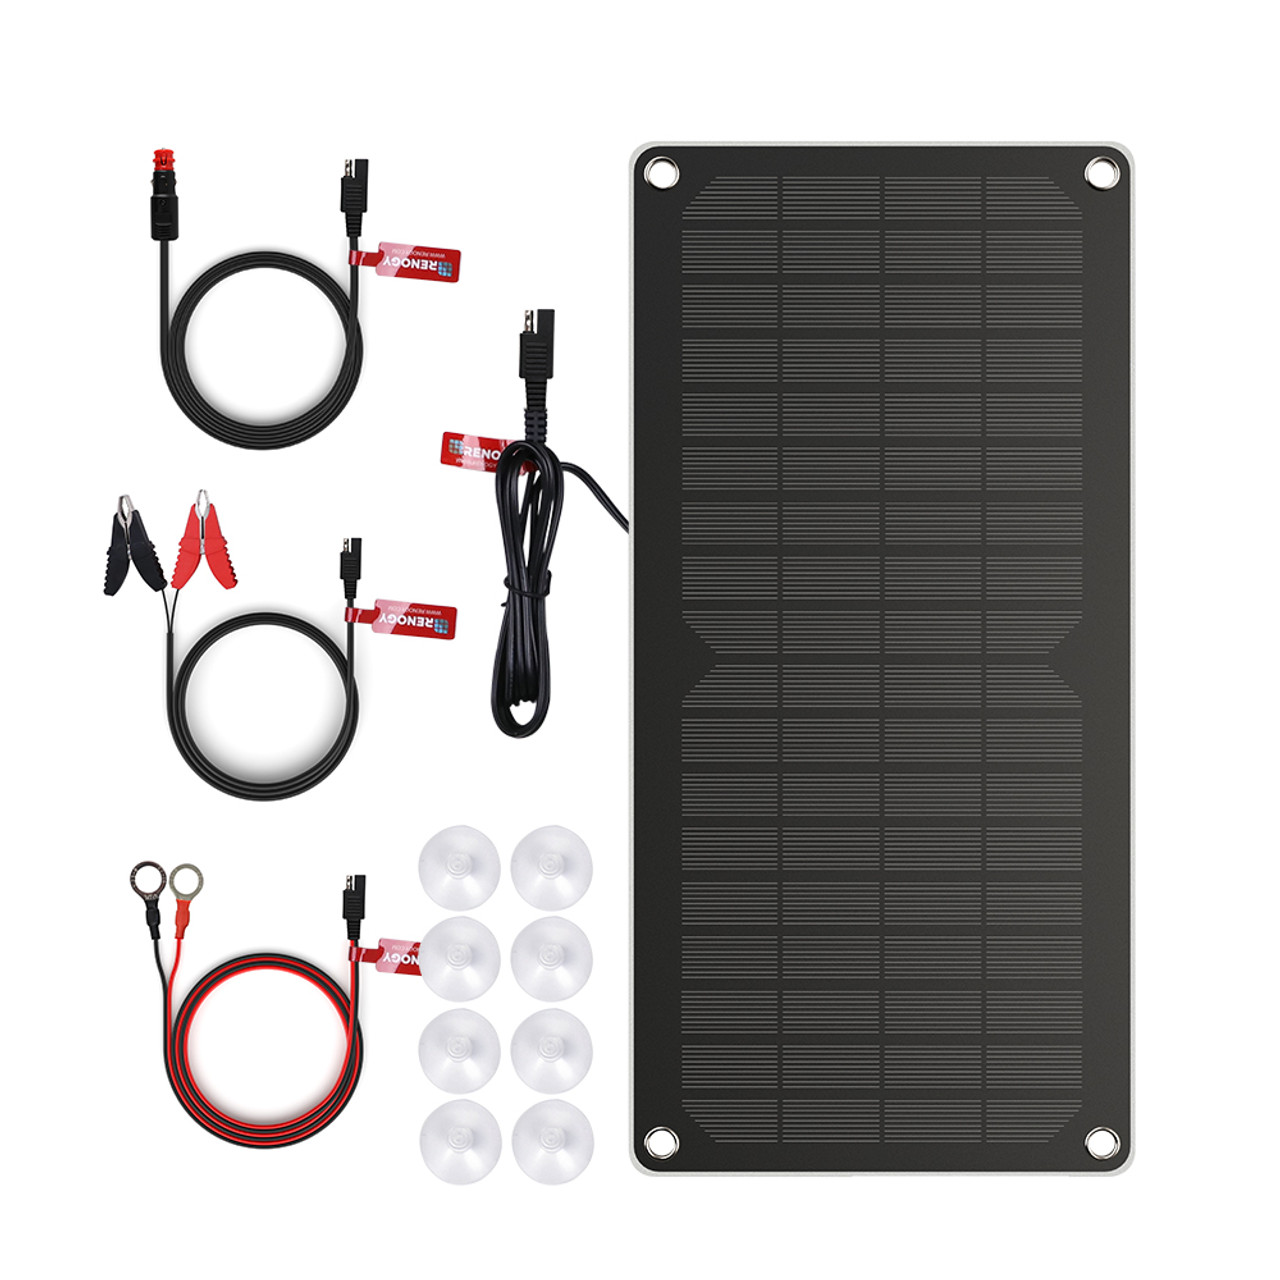 Afleiding Vaardigheid Picknicken 10W Solar Battery Charger and Maintainer | Renogy Solar